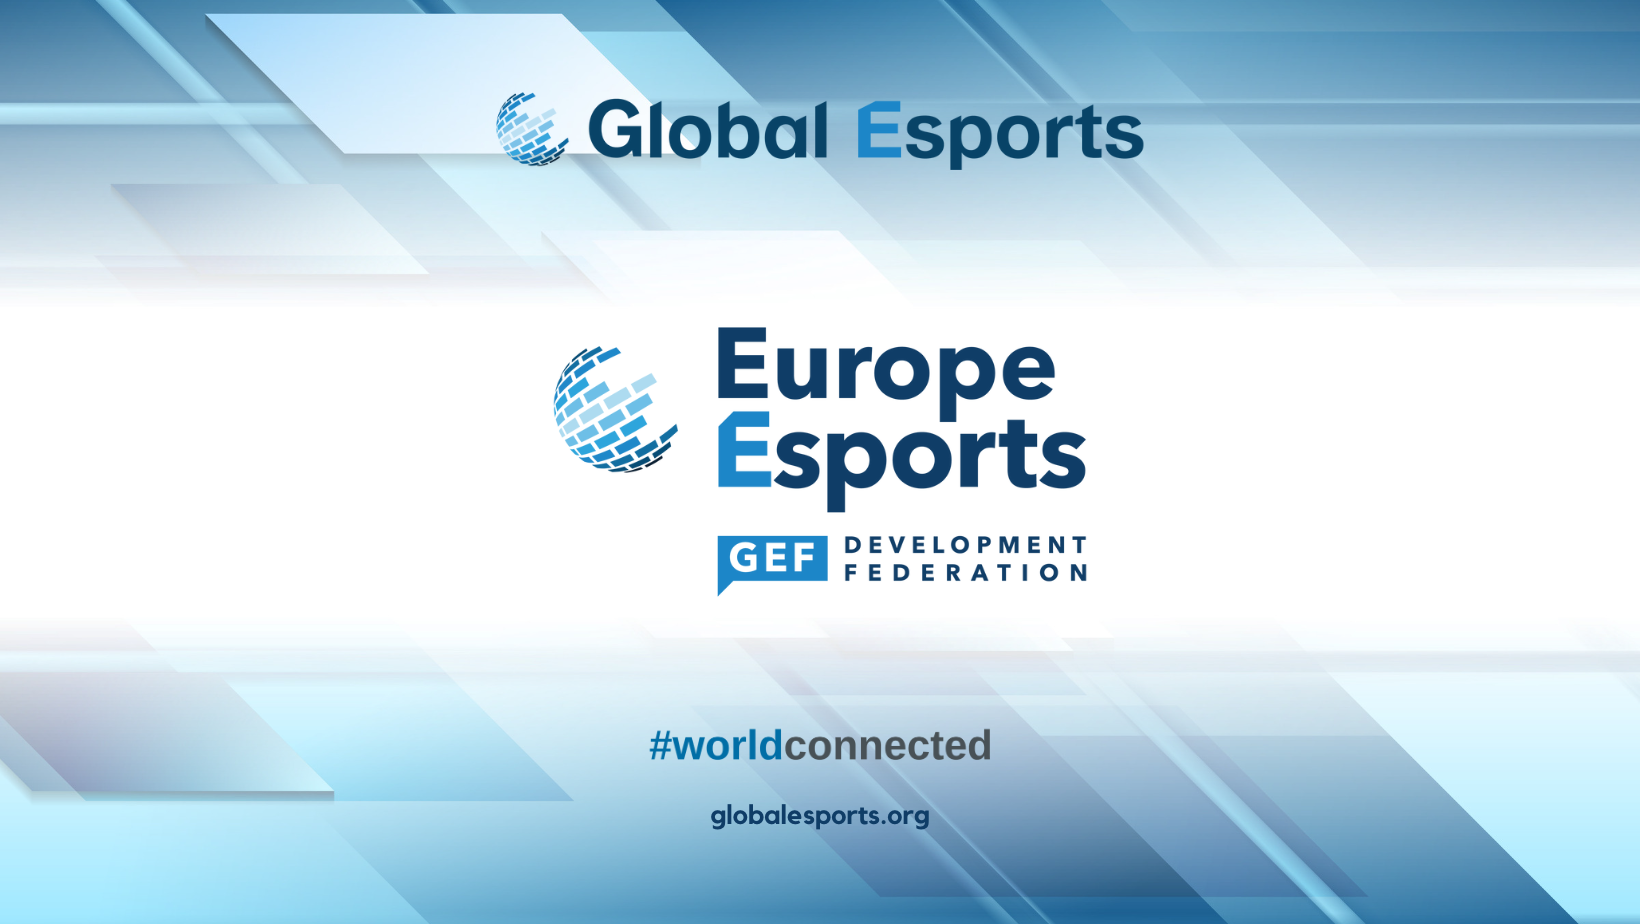 Global Esports Federation establishes Europe Esports Development Federation